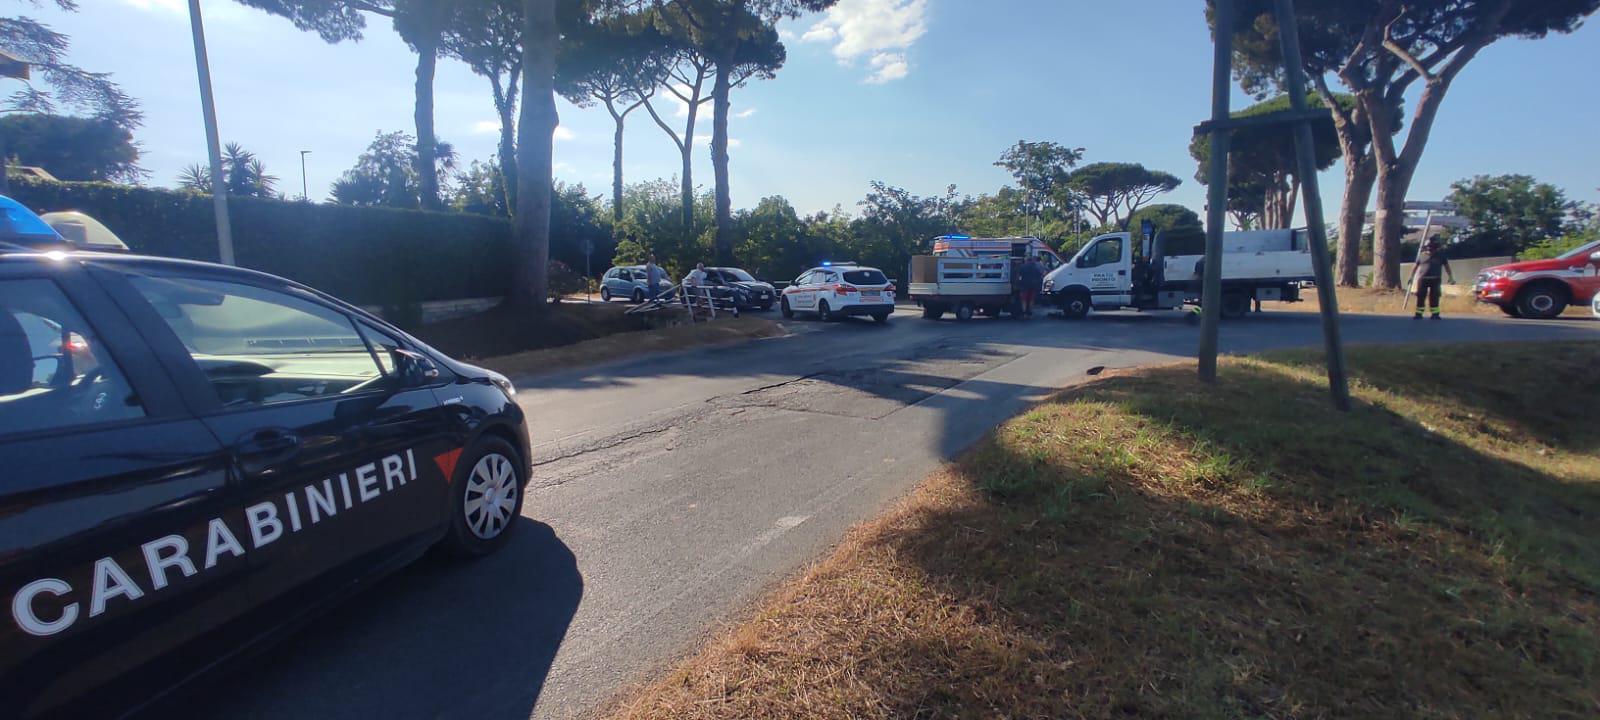 San Felice Circeo / Incidente stradale lungo via mediana vecchia, 66enne finisce in ospedale